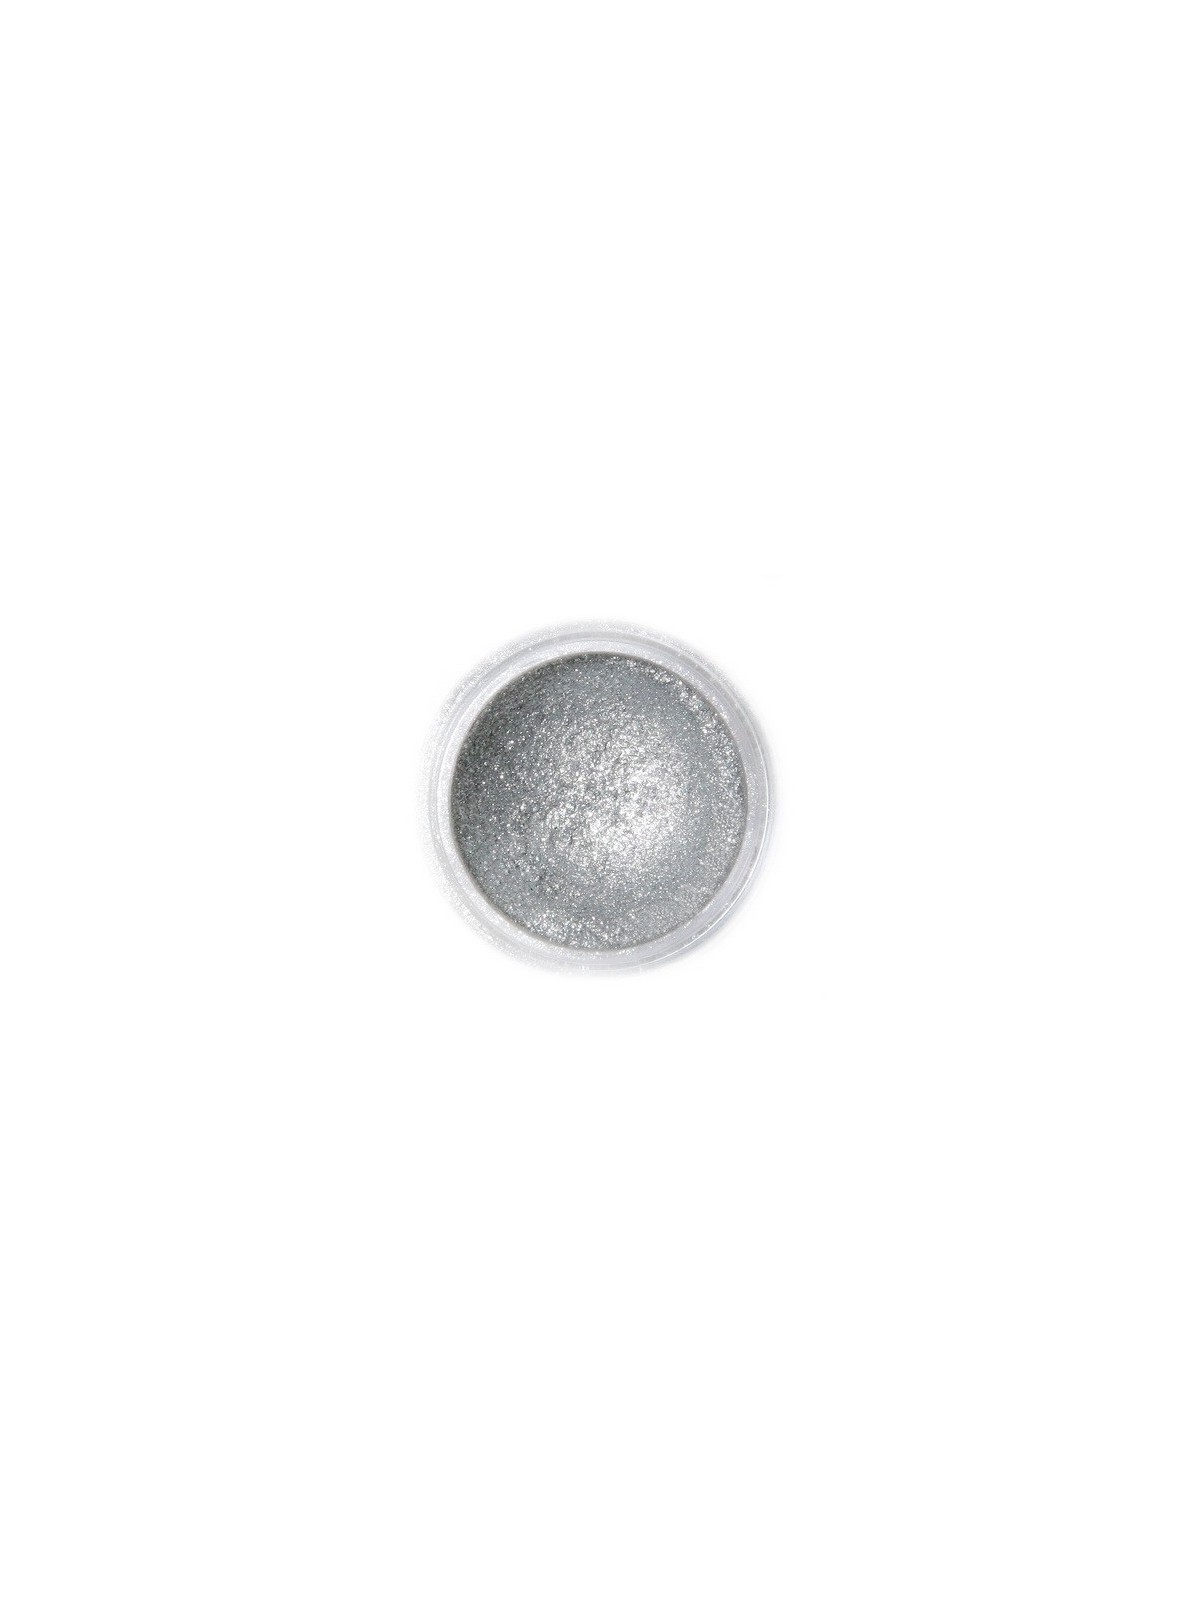 Dekorativní prachová perleťová barva Fractal - Sparkling Dark Silver (3,5 g)